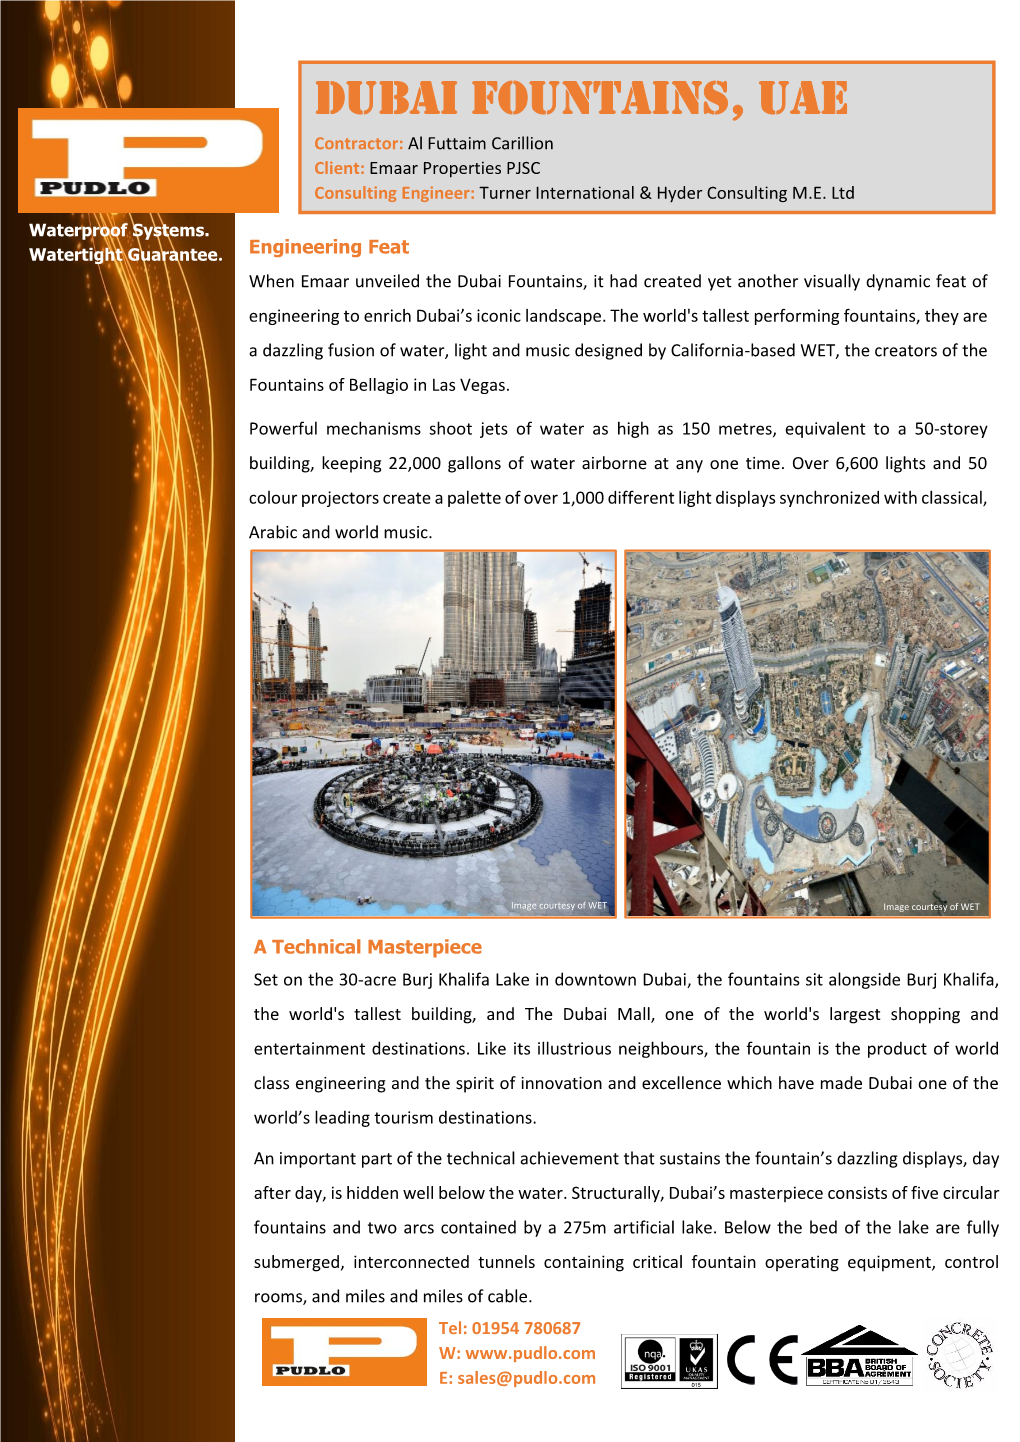 Dubai Fountains, Uae Contractor: Al Futtaim Carillion Client: Emaar Properties PJSC Consulting Engineer: Turner International & Hyder Consulting M.E